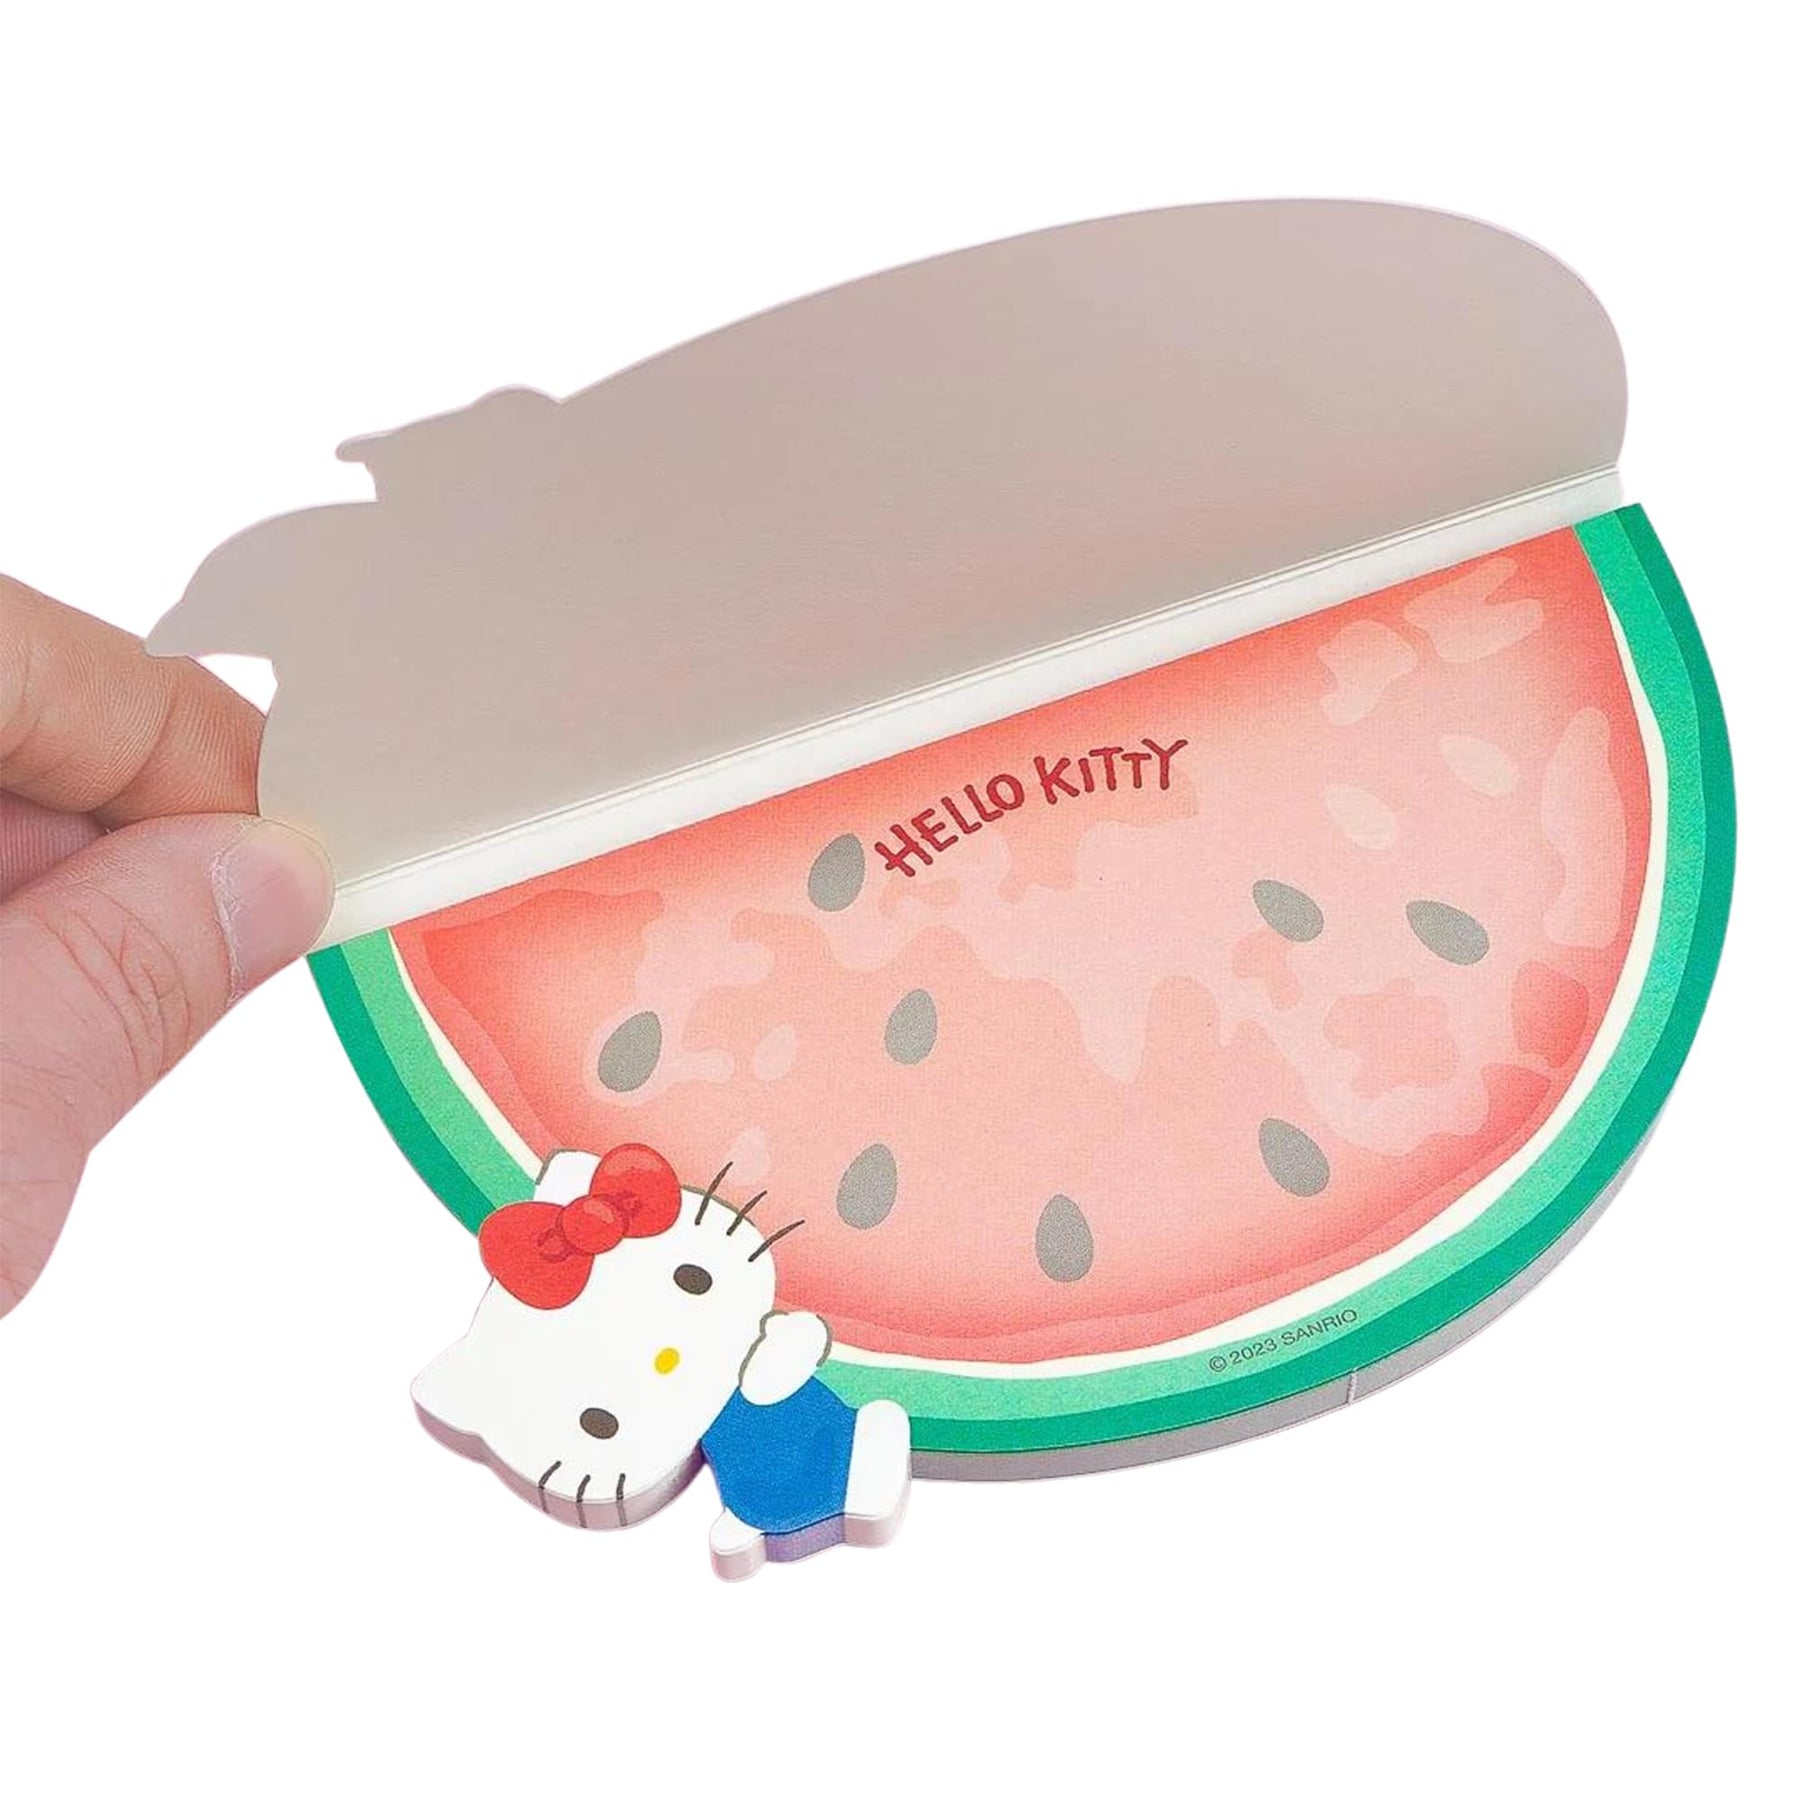 Hello Kitty Watermelon Memo Pad